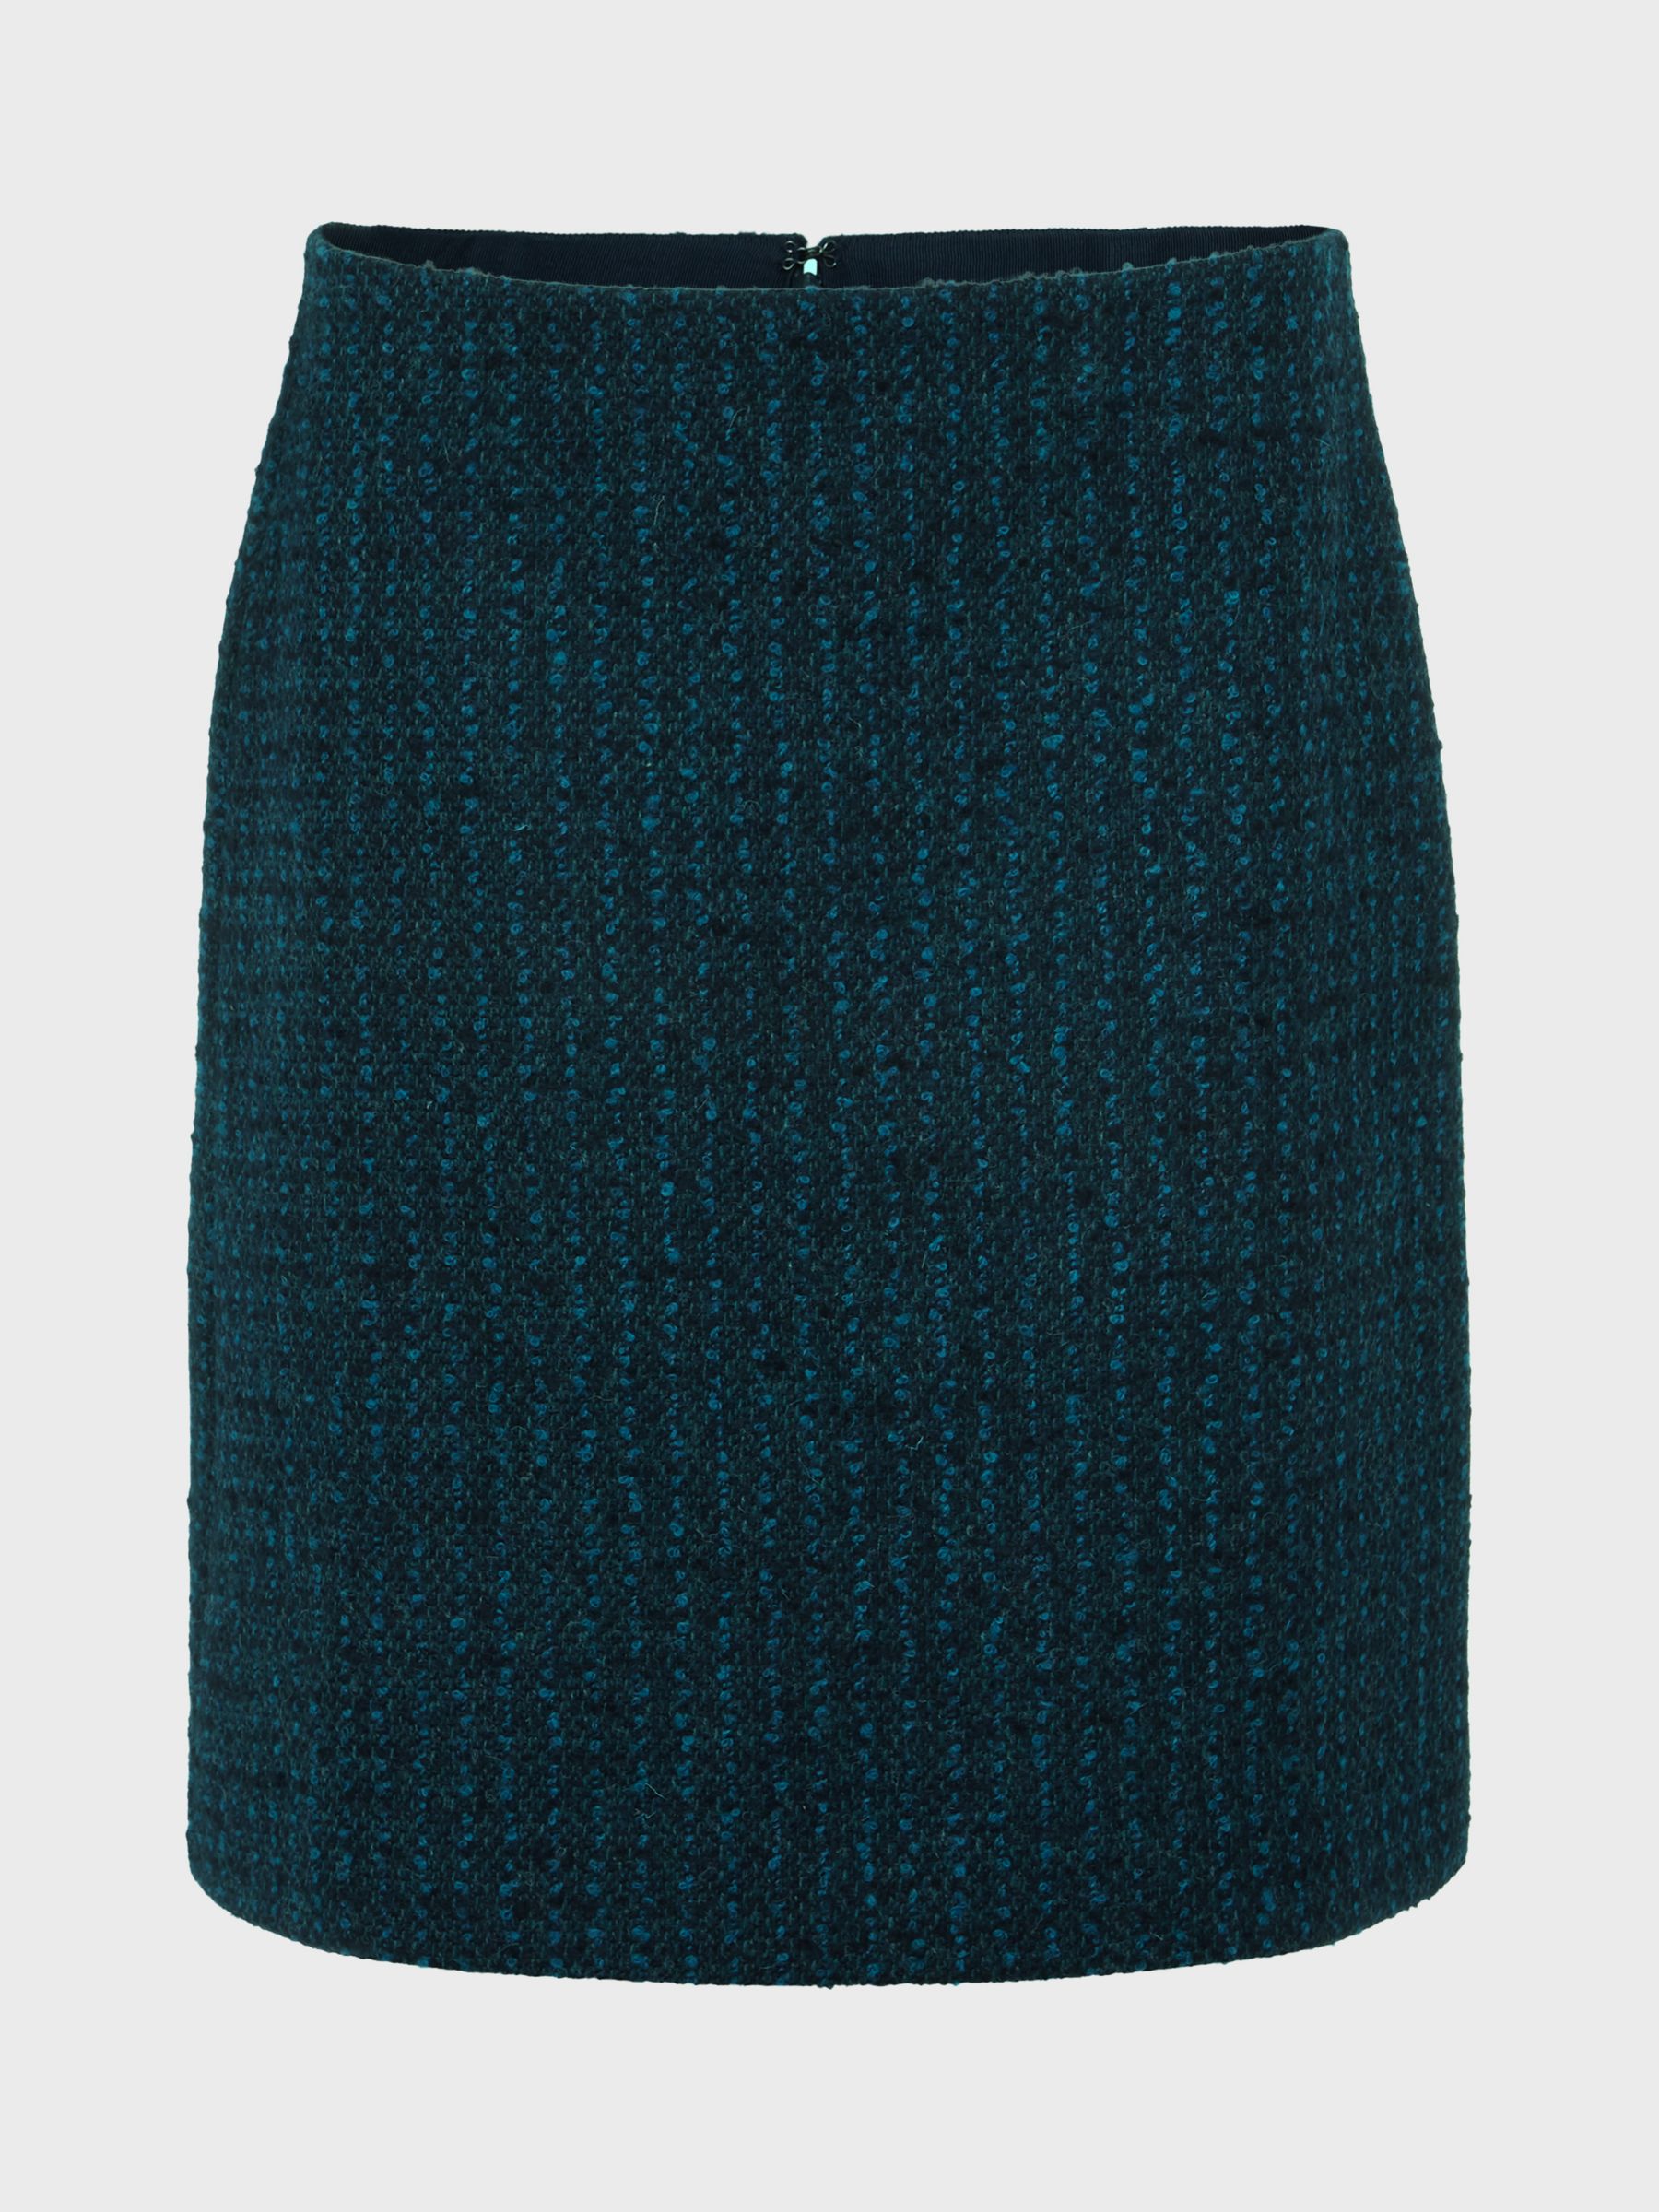 Hobbs Teia Wool Blend Mini Skirt, Deep Teal Blue at John Lewis & Partners